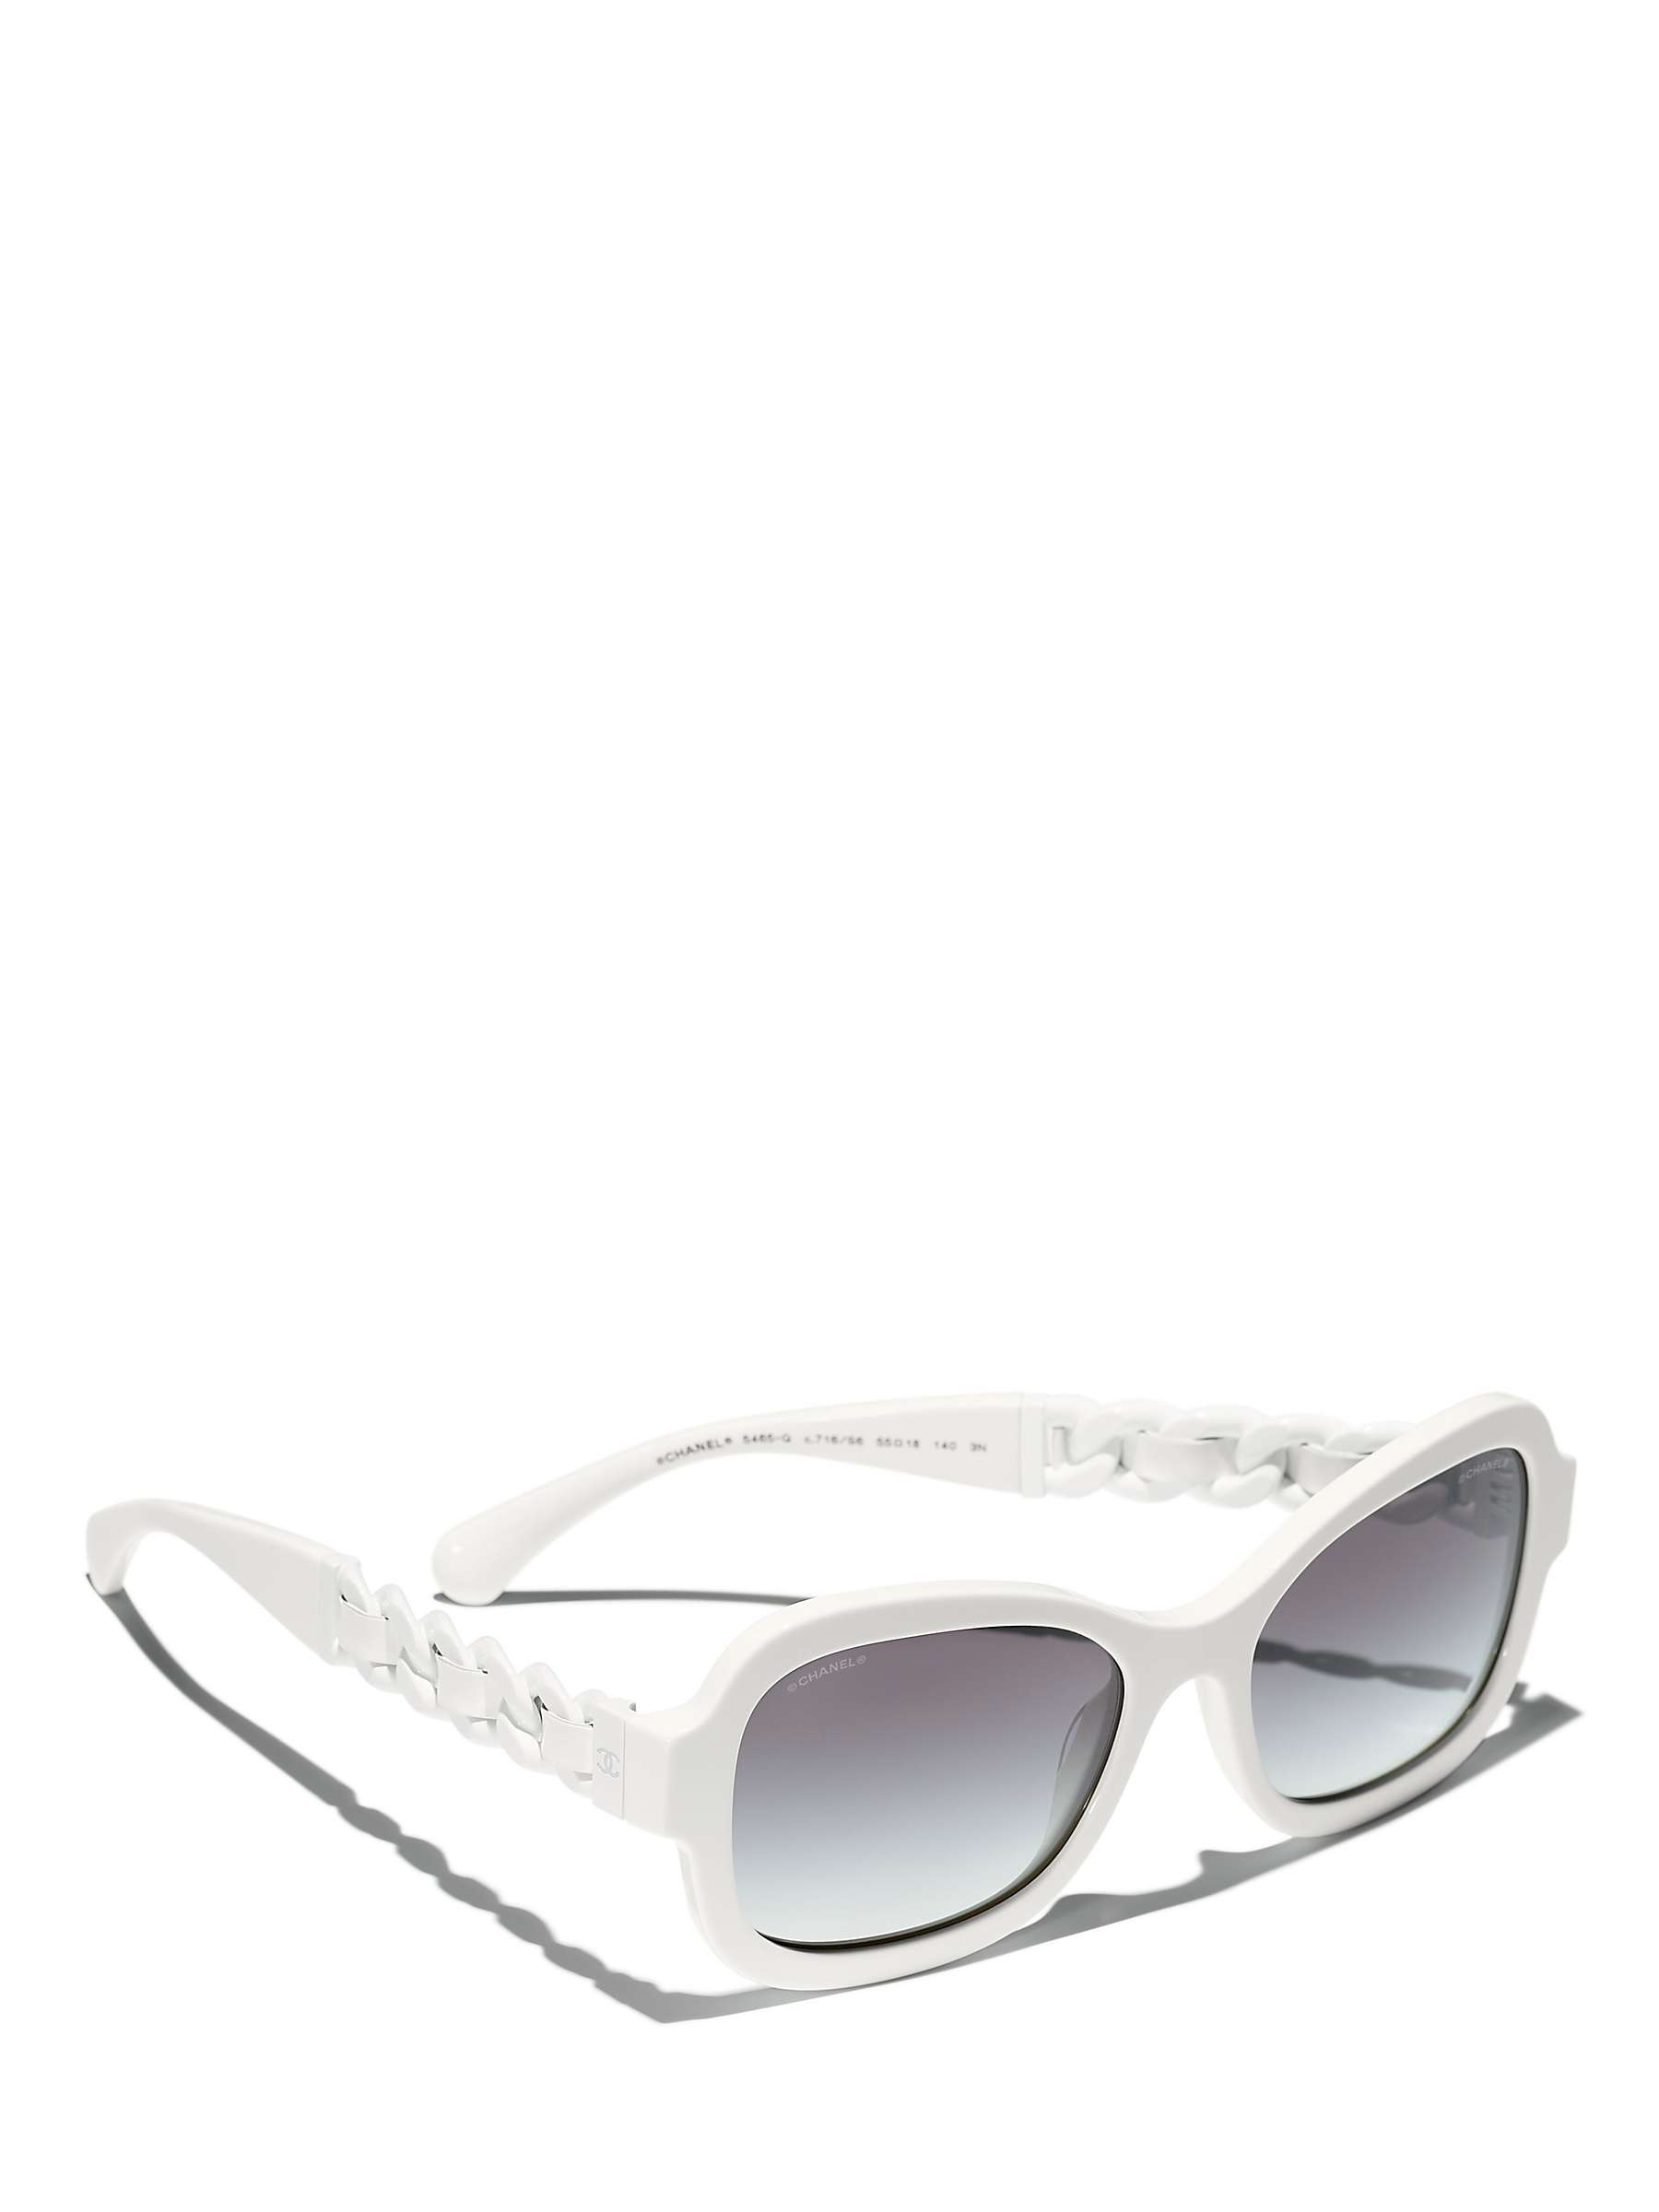 Buy CHANEL Irregular Sunglasses CH5465Q White/Blue Gradient Online at johnlewis.com